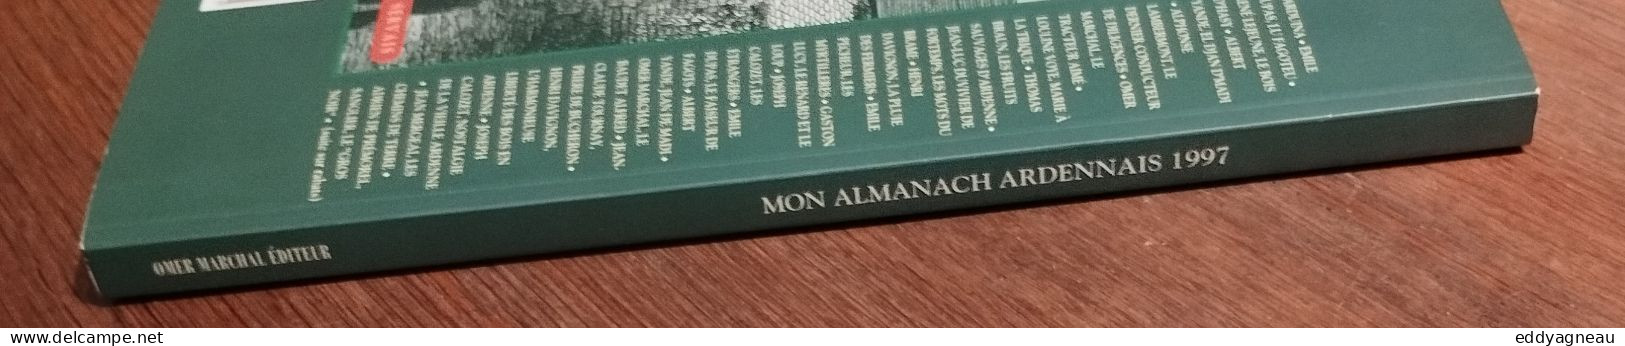 Almanach ardennais 1997 - Servais - Arthur Masson - Joseph Calozet, ...